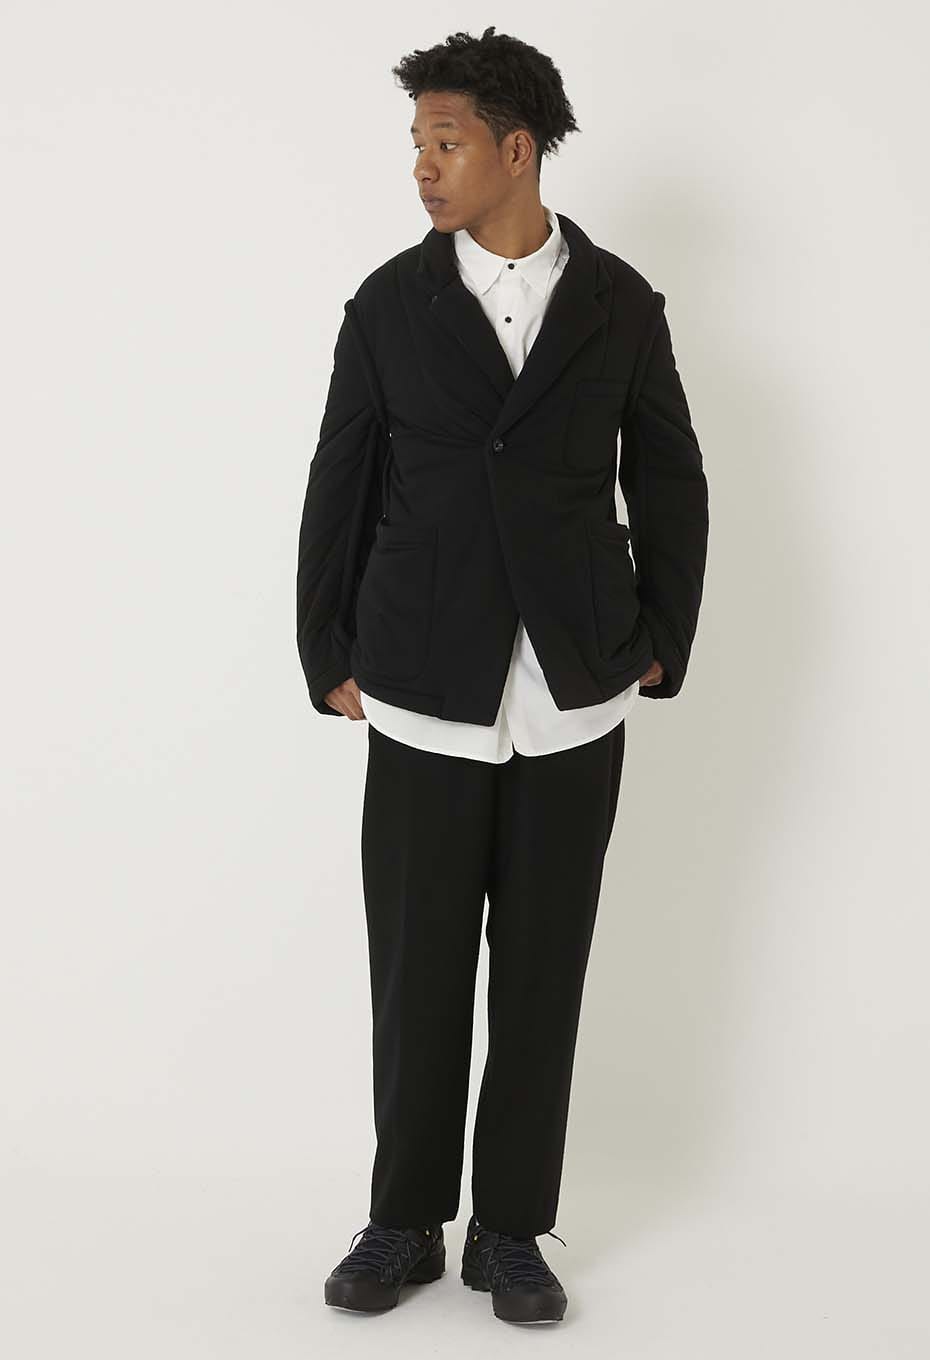 Kozaburo コウザブロウ 21AW Monkwear スーツジャケット ダウンジャケット アウトレット 格安通販